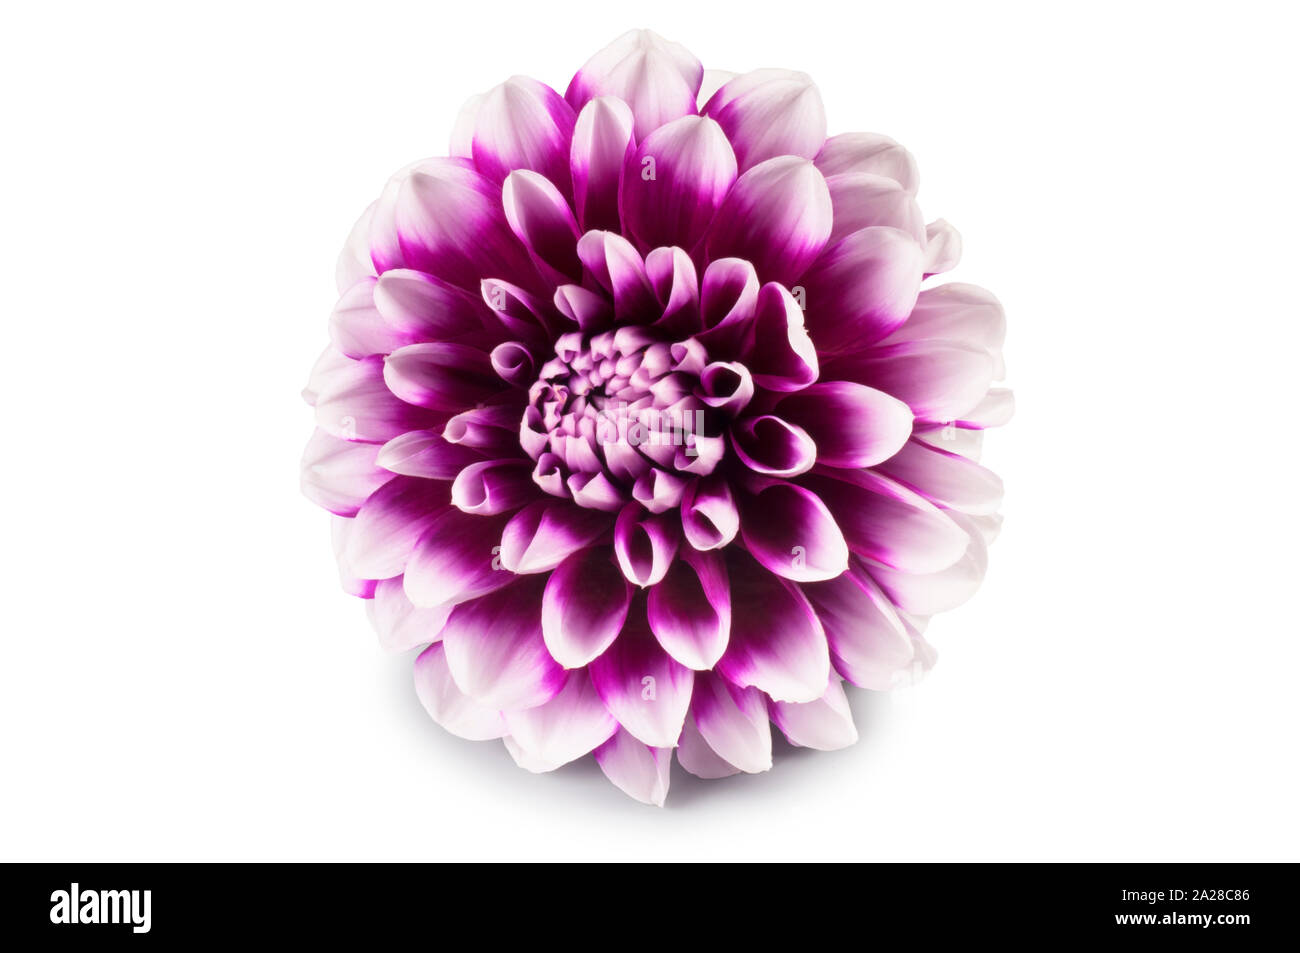 Studio shot of dahlia flower cut out against a white background - John Gollop Stock Photo